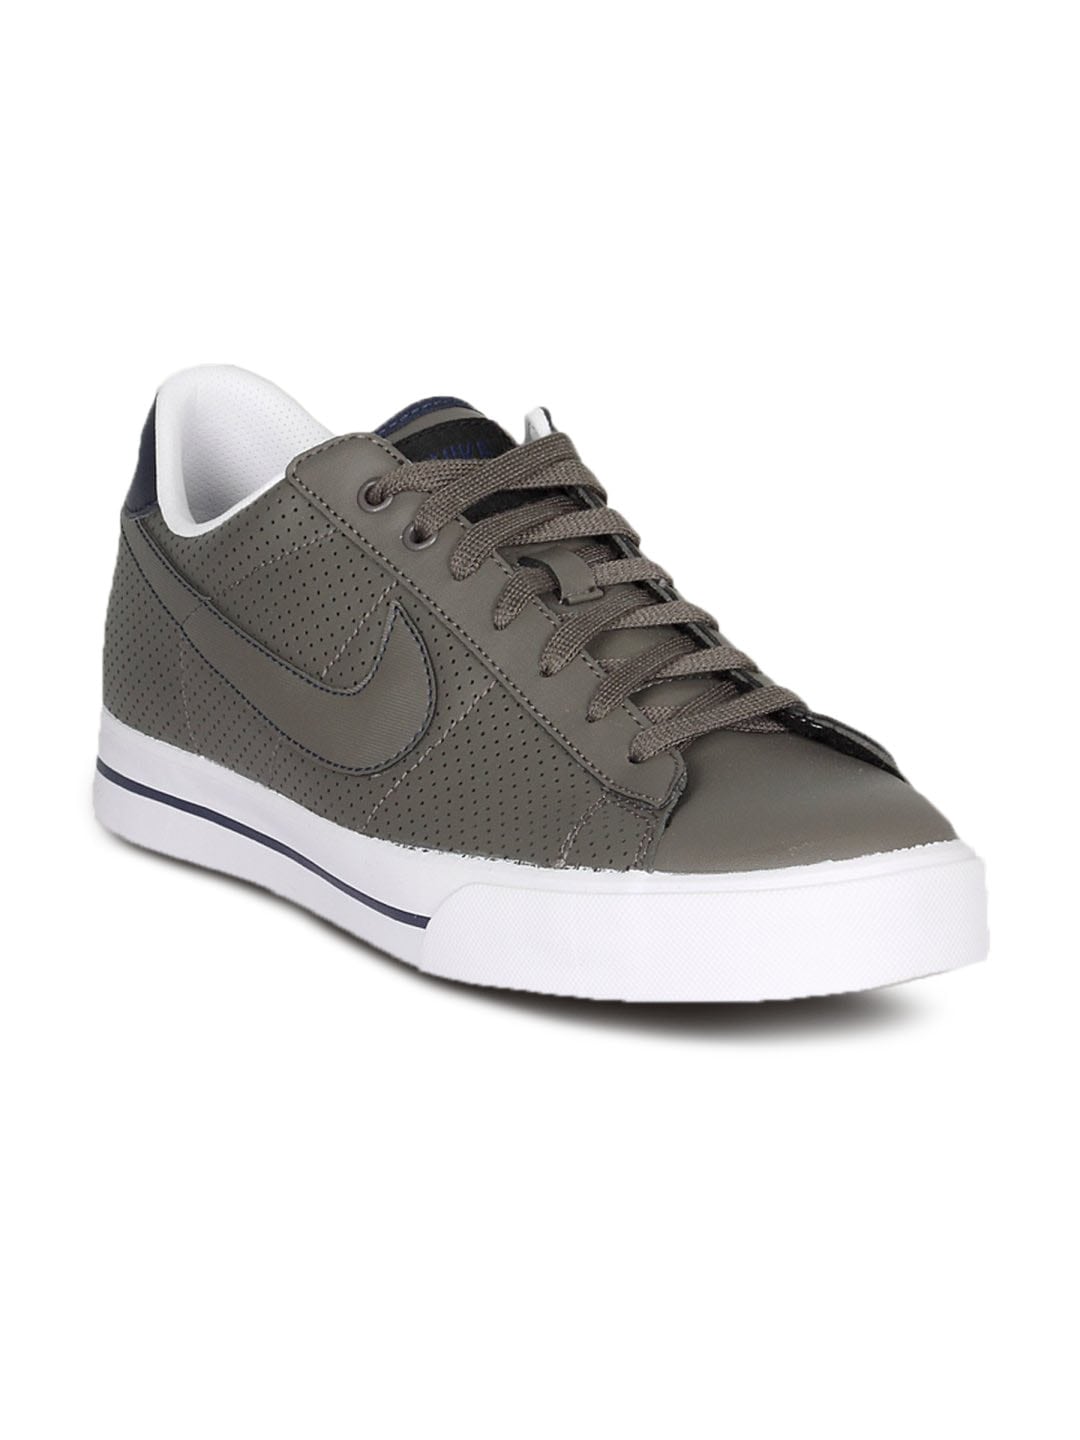 Nike Men's Sweet Classic Leather Grey White Shoe